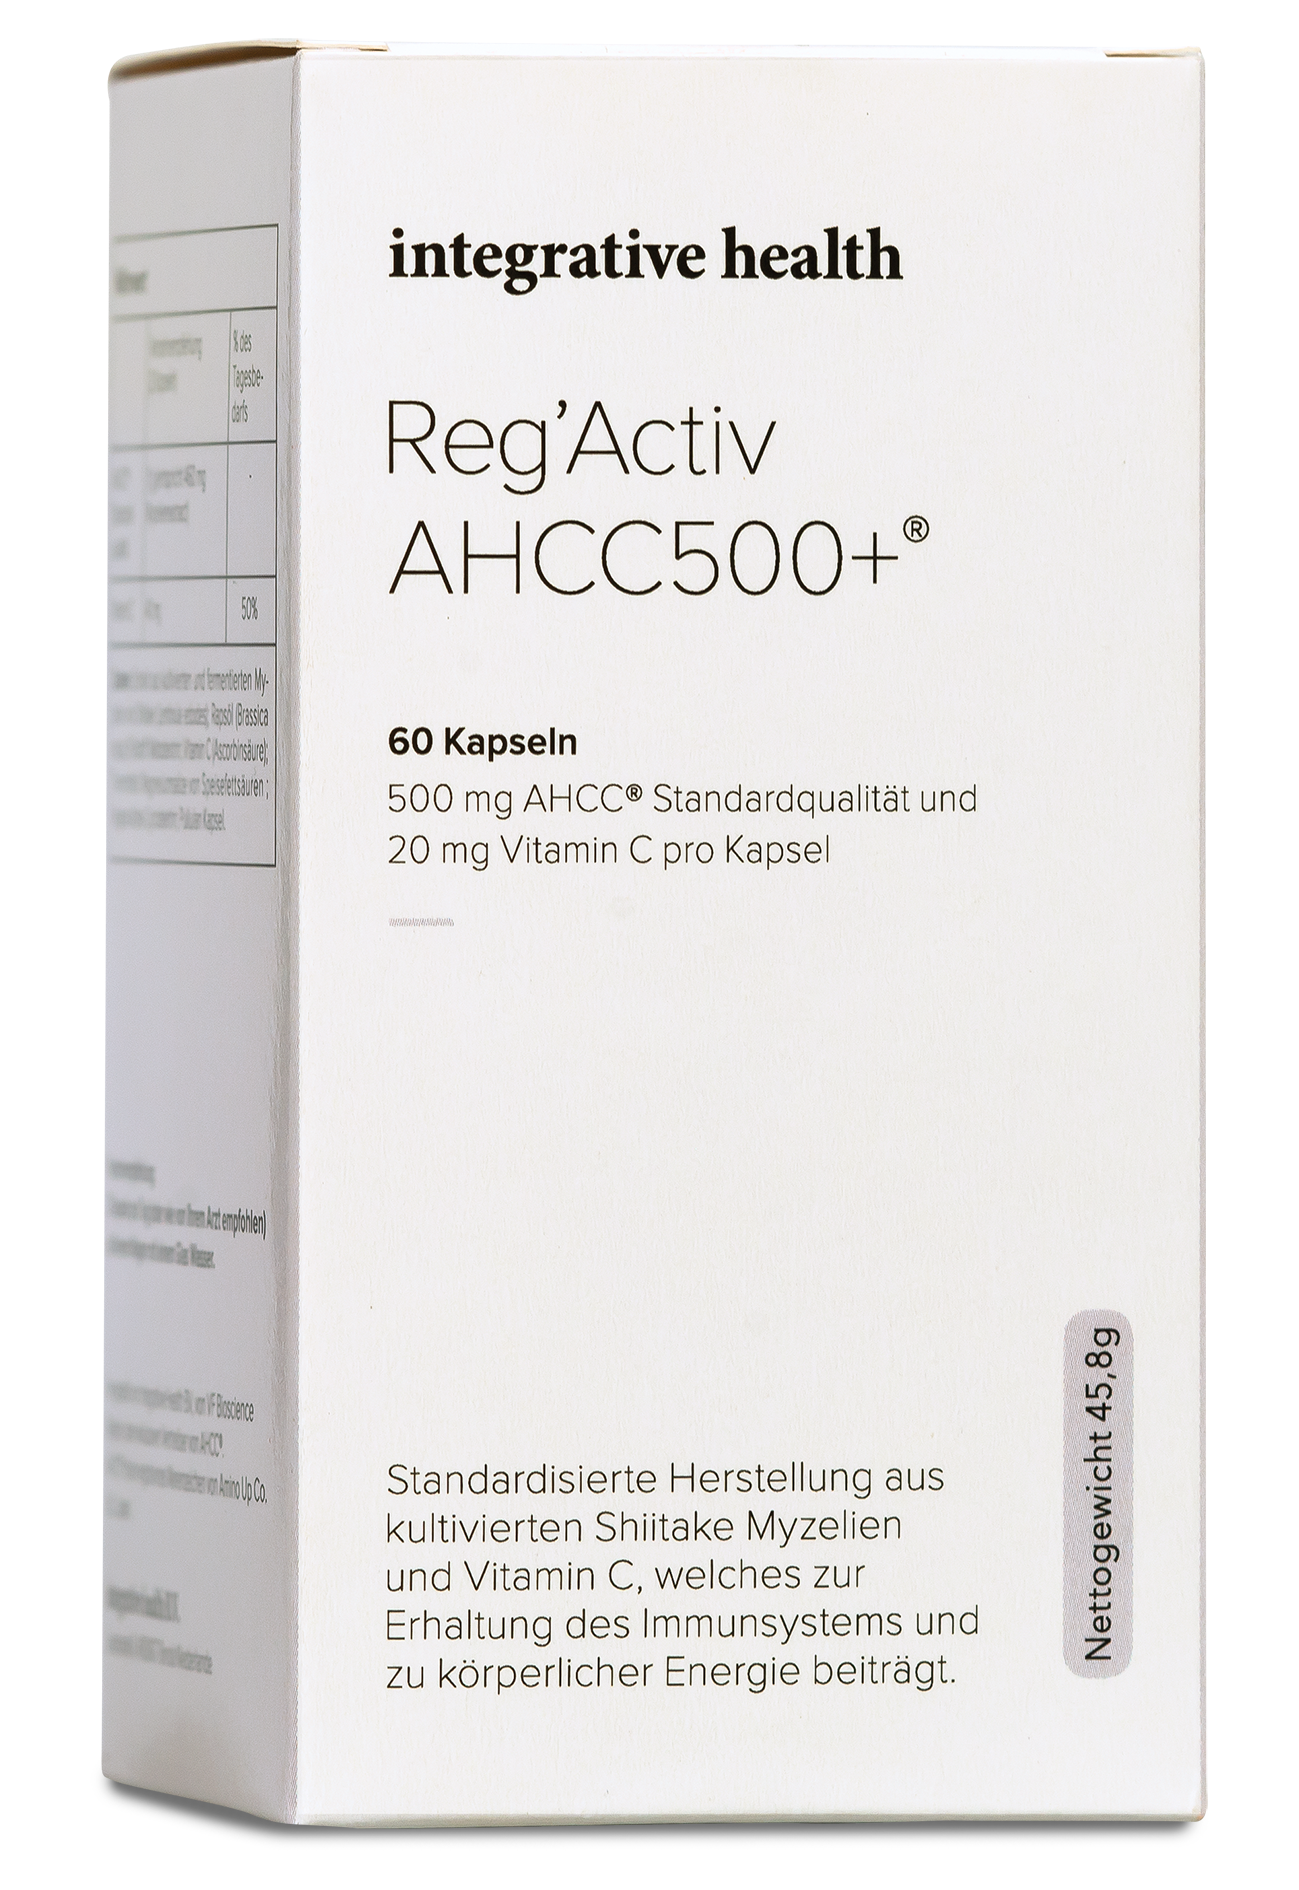 AHCC500 + ® / 60 Kapseln / Integrative Health